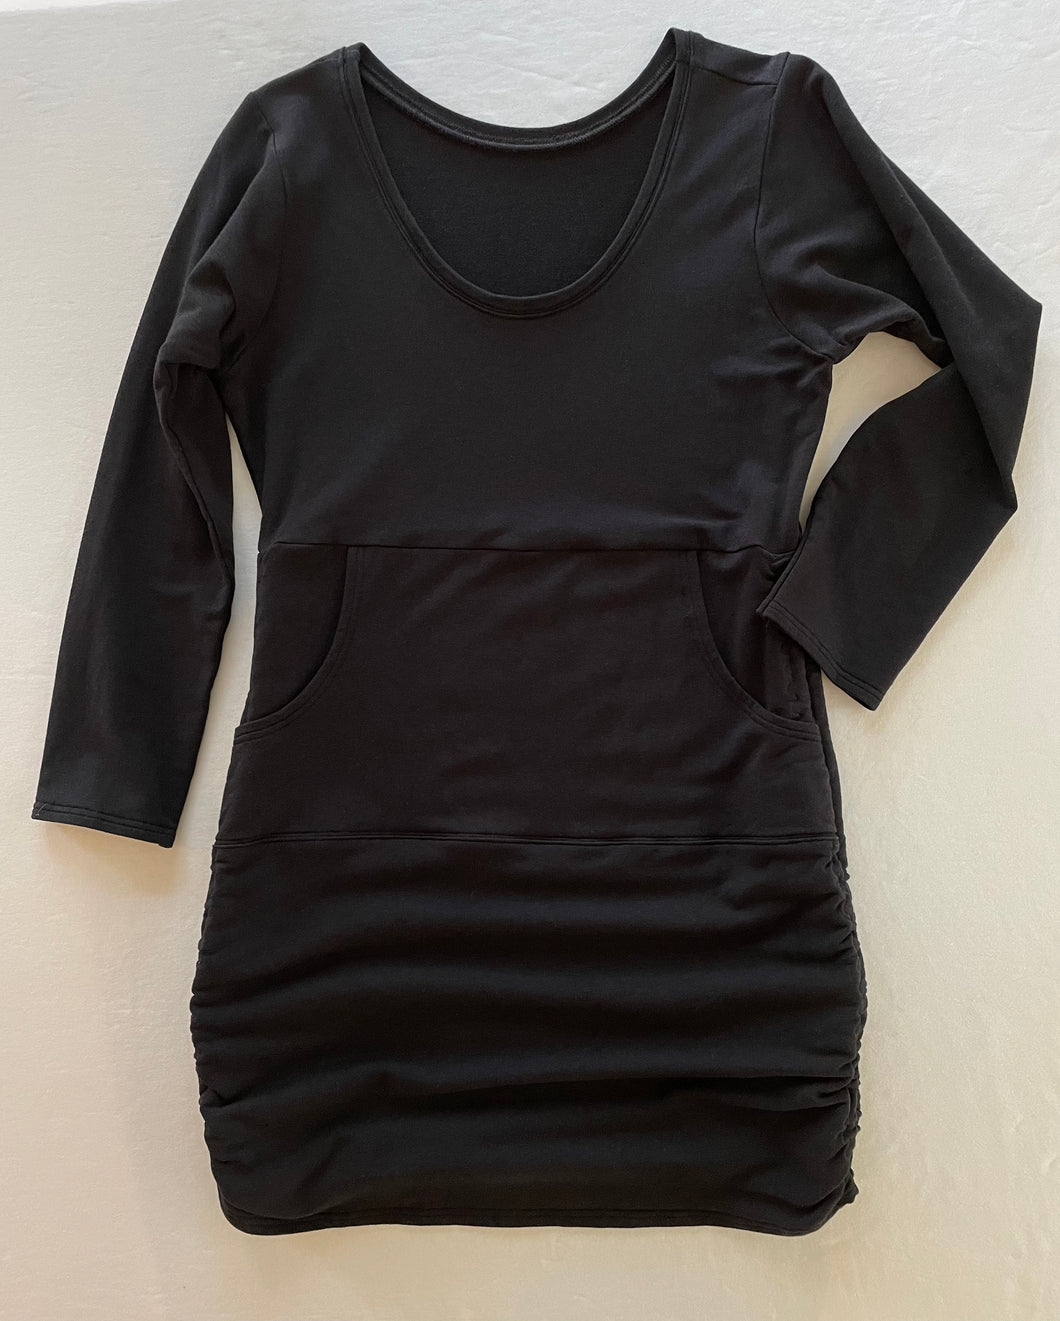 Large Second hand ‘viragoes duds’ Black Dress